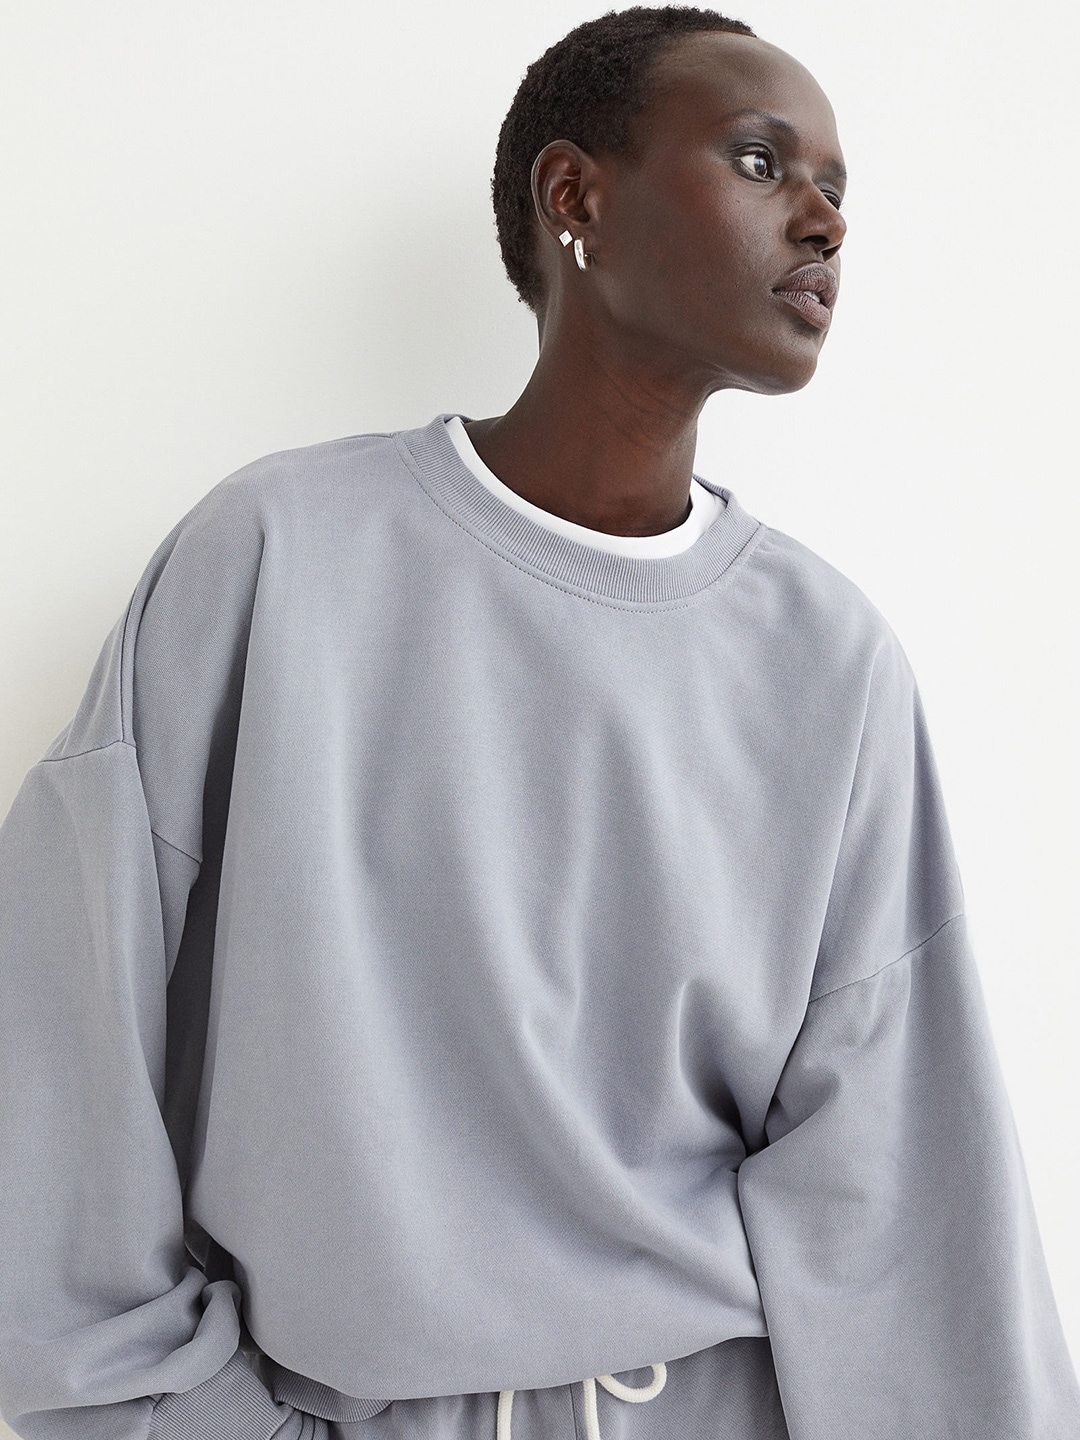 H&M Women Grey Sweatshirt Price in India